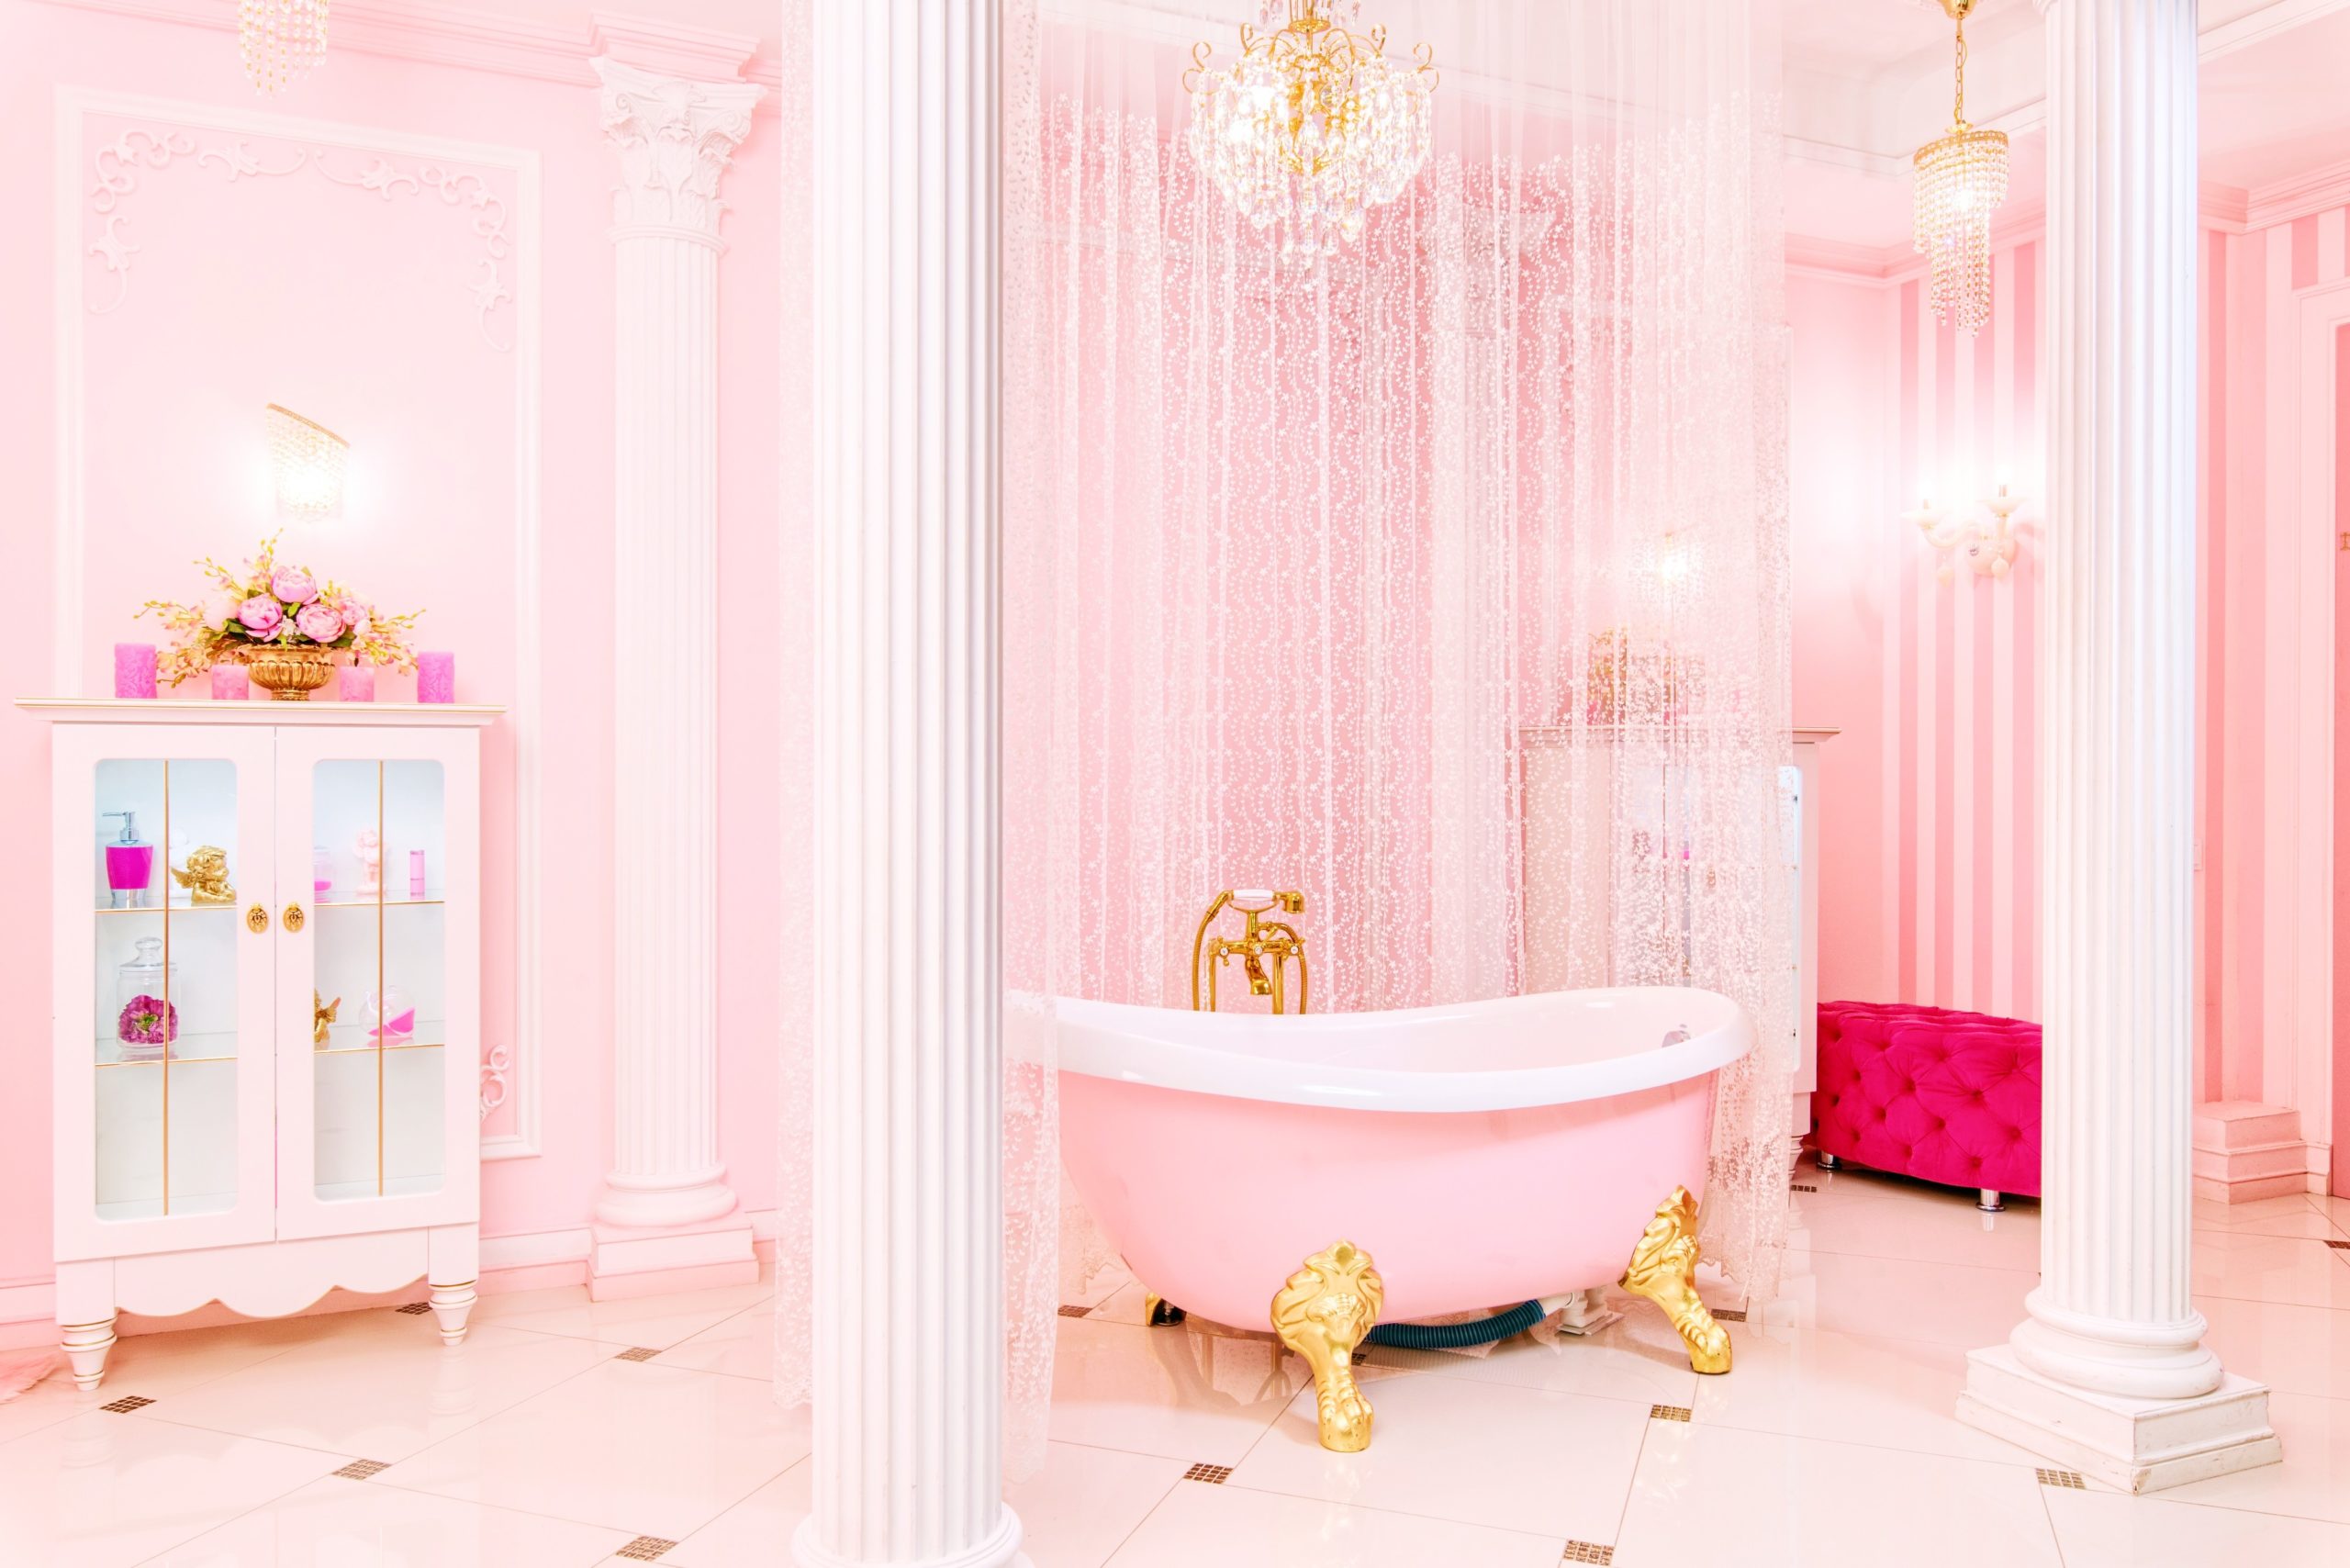 <img src="pink.jpg" alt="baby pink luxury bathroom"/> 